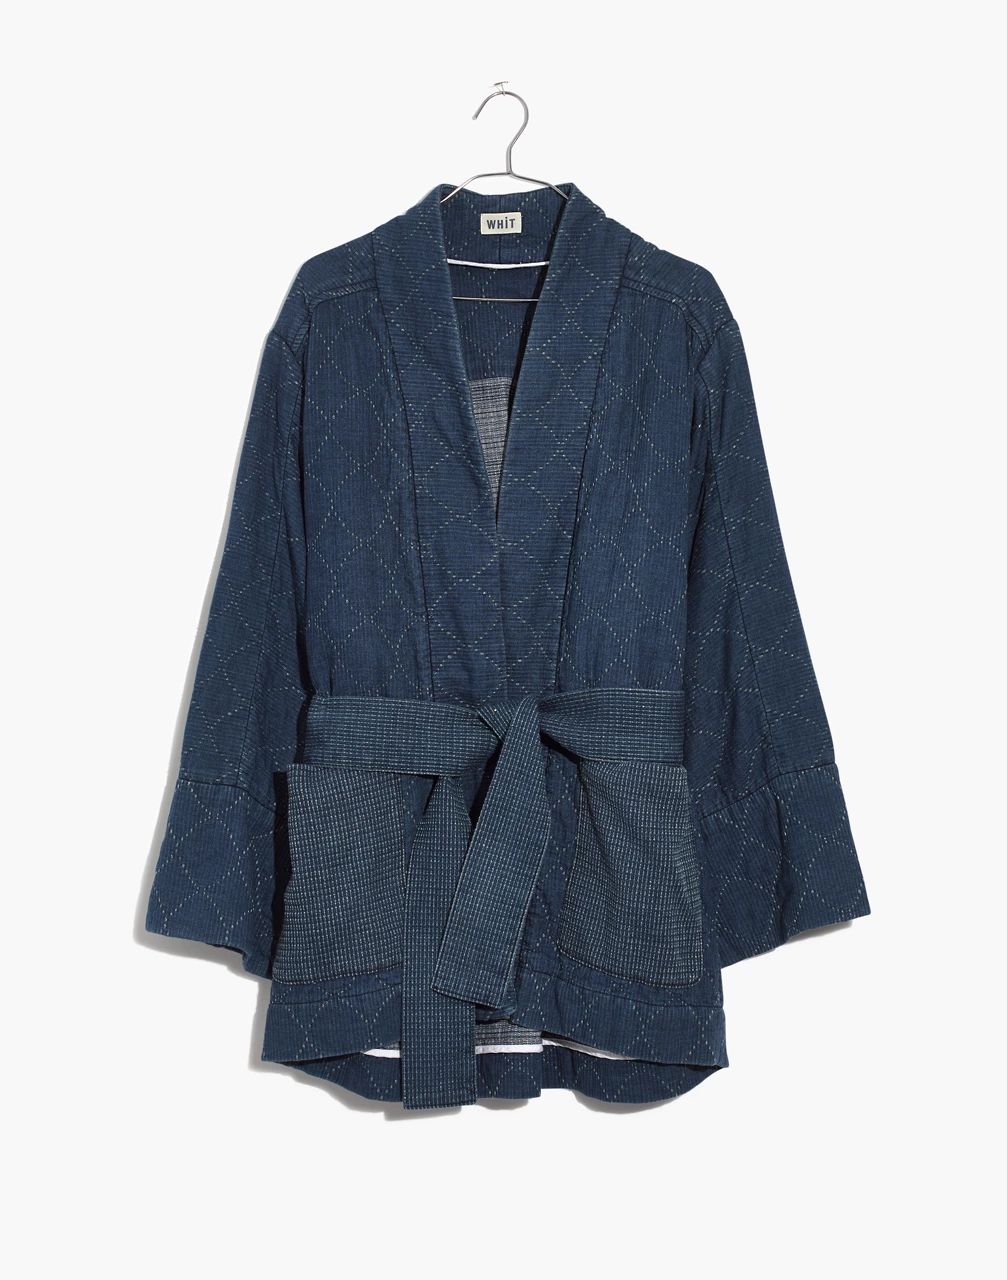 Whit® Denim Kimono Jacket | Madewell